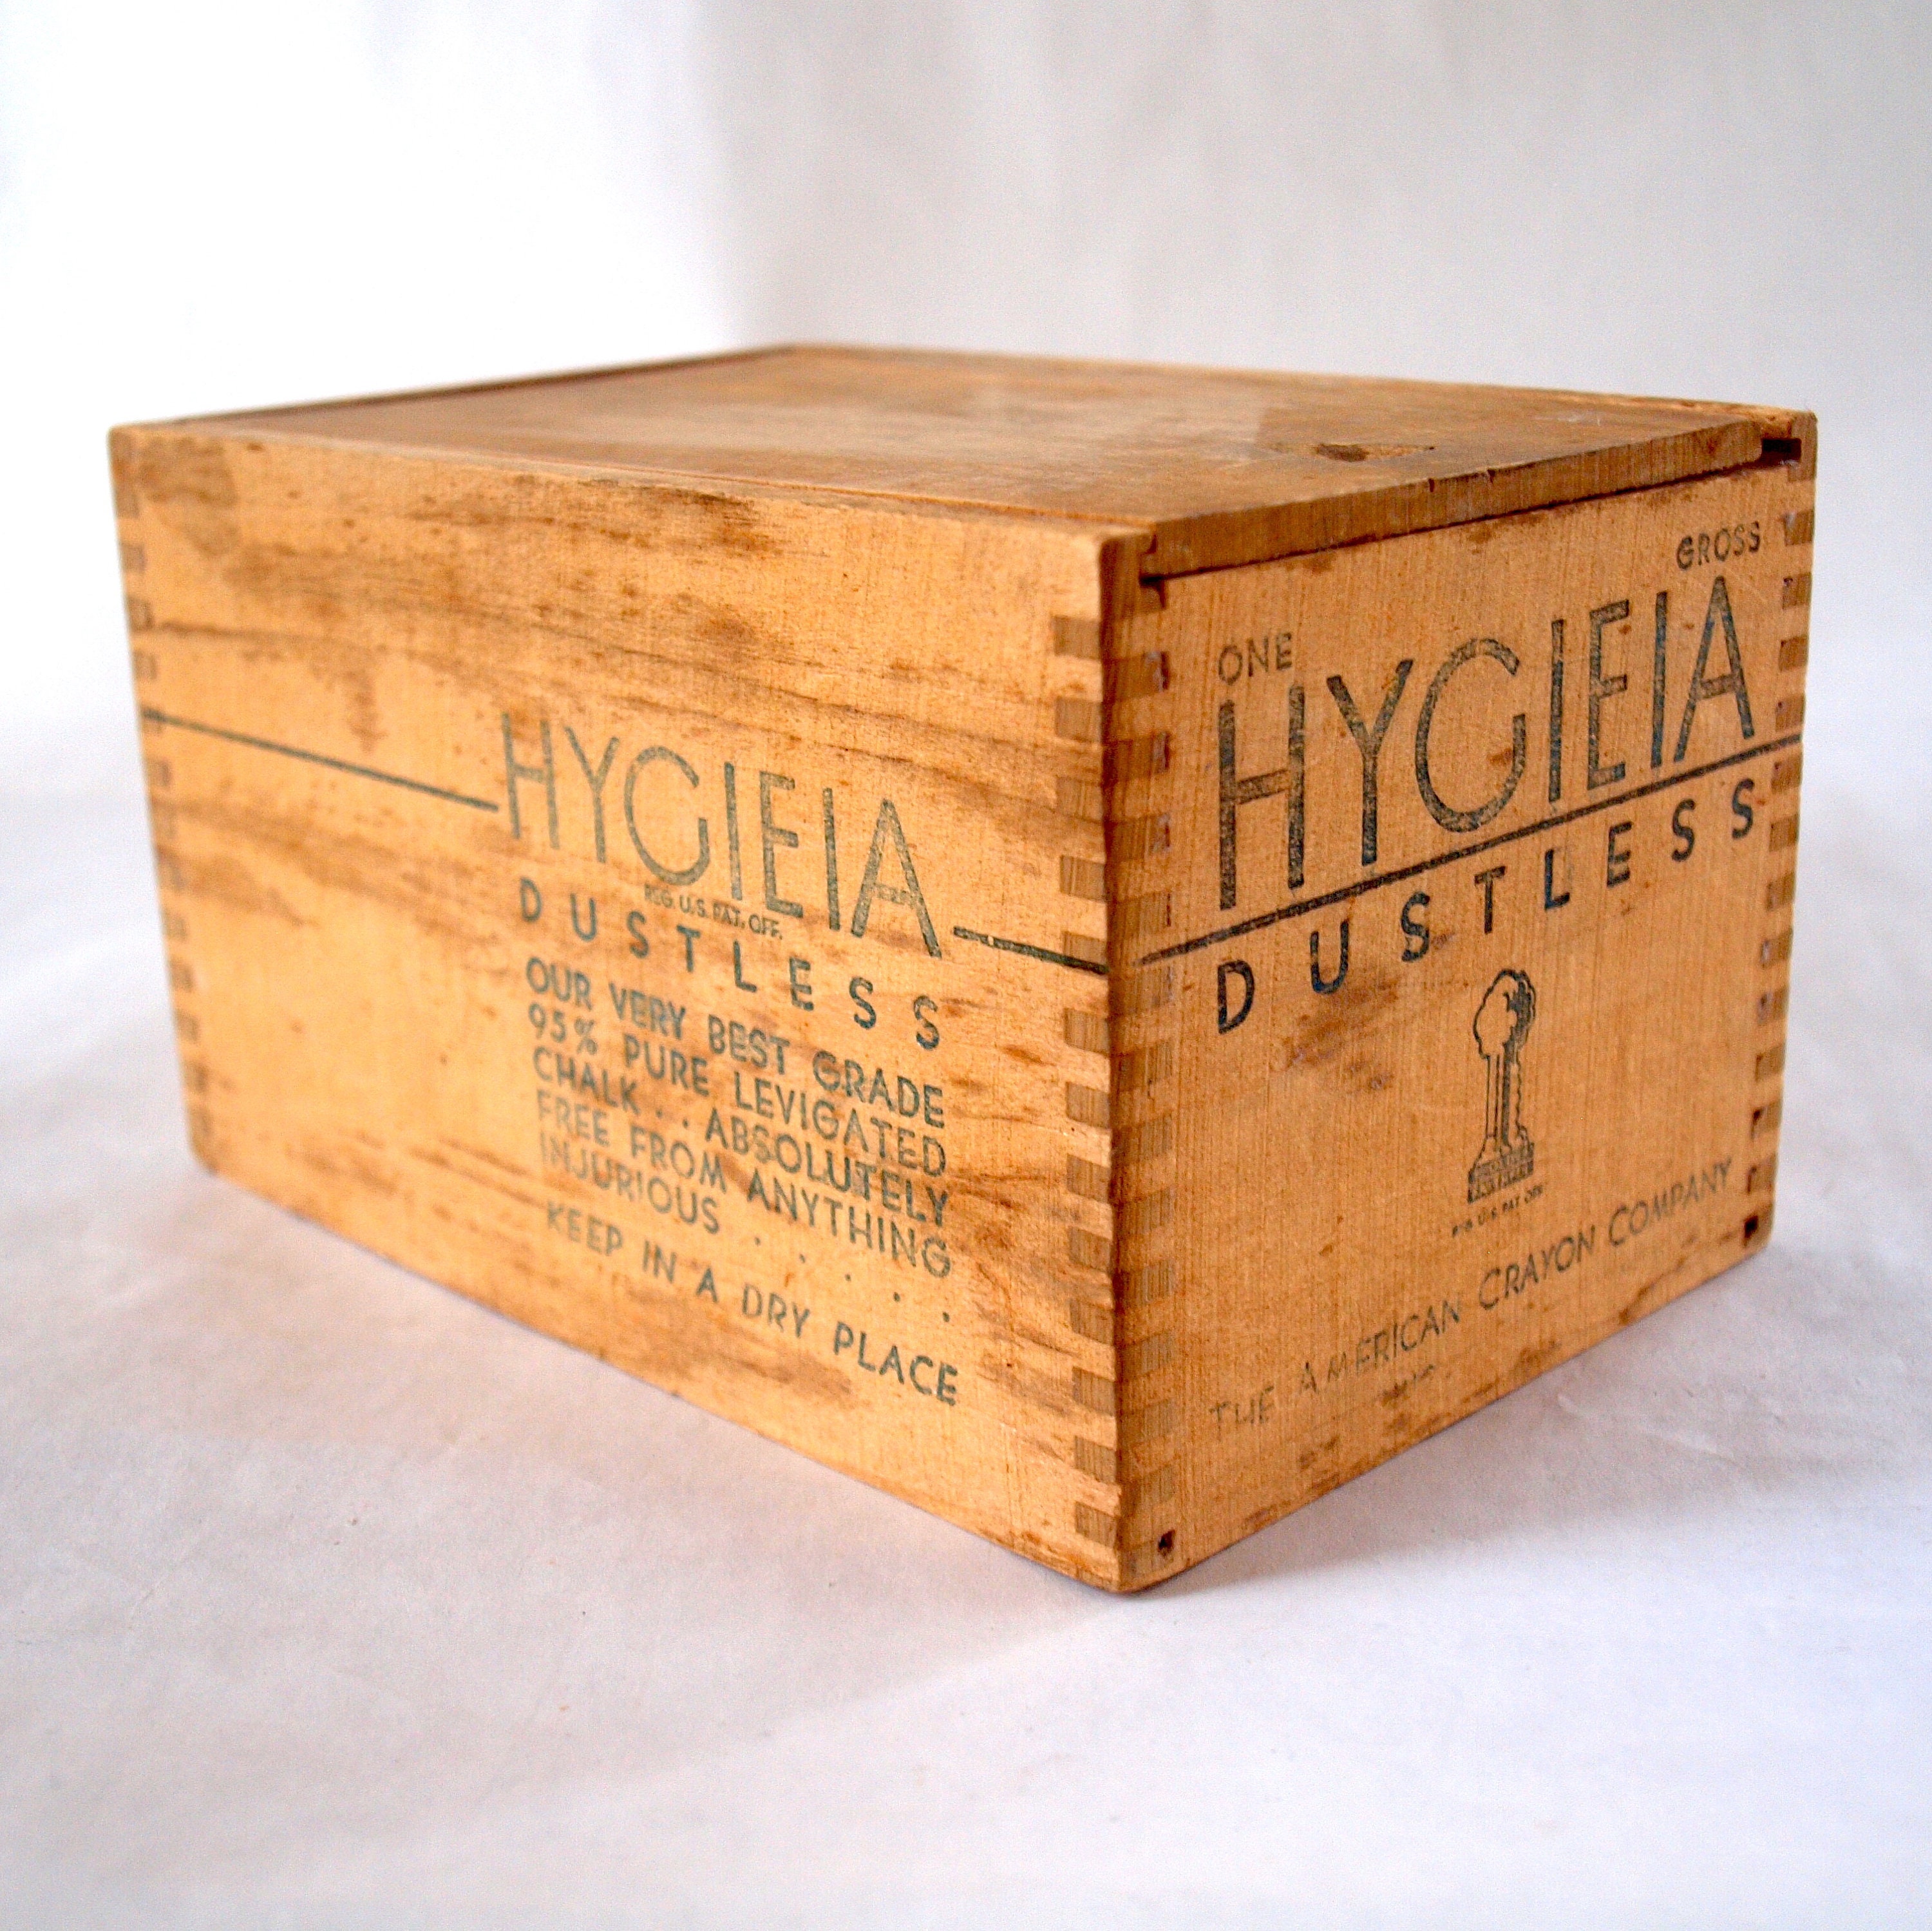 Wooden Box, Vintage Wooden Box With Slide Top, Hygieia Dustless Chalk Box 